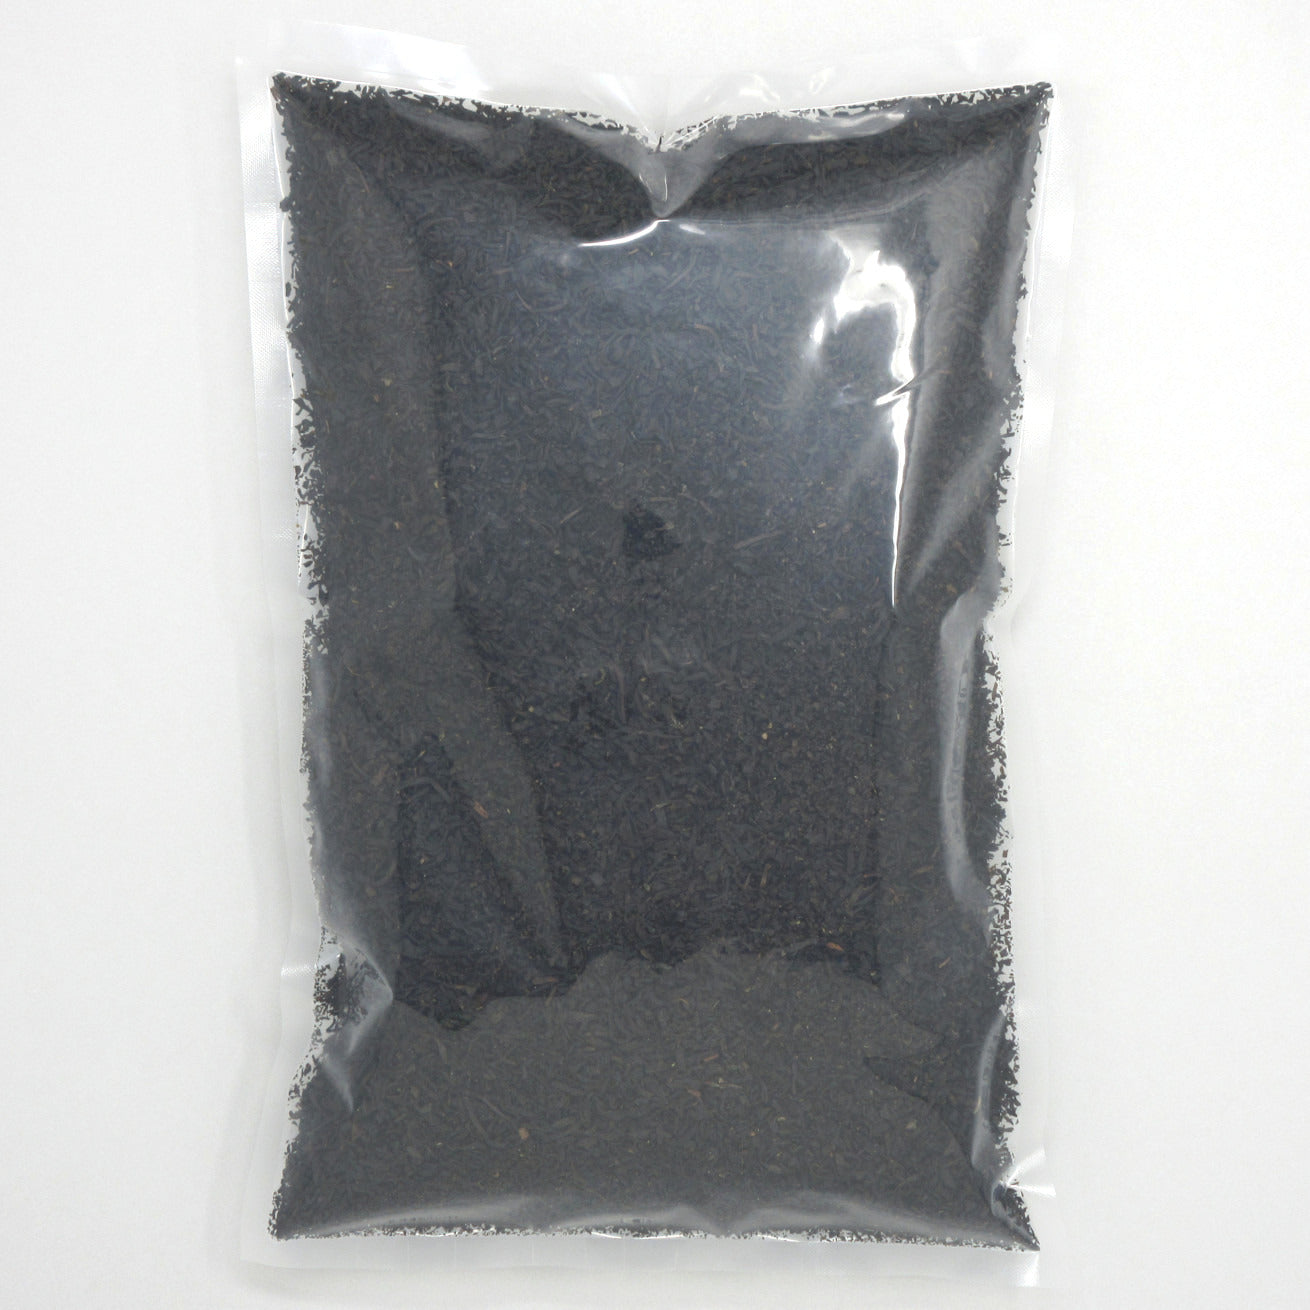 Flour Barrel product image - Earl Grey Leaf Tea